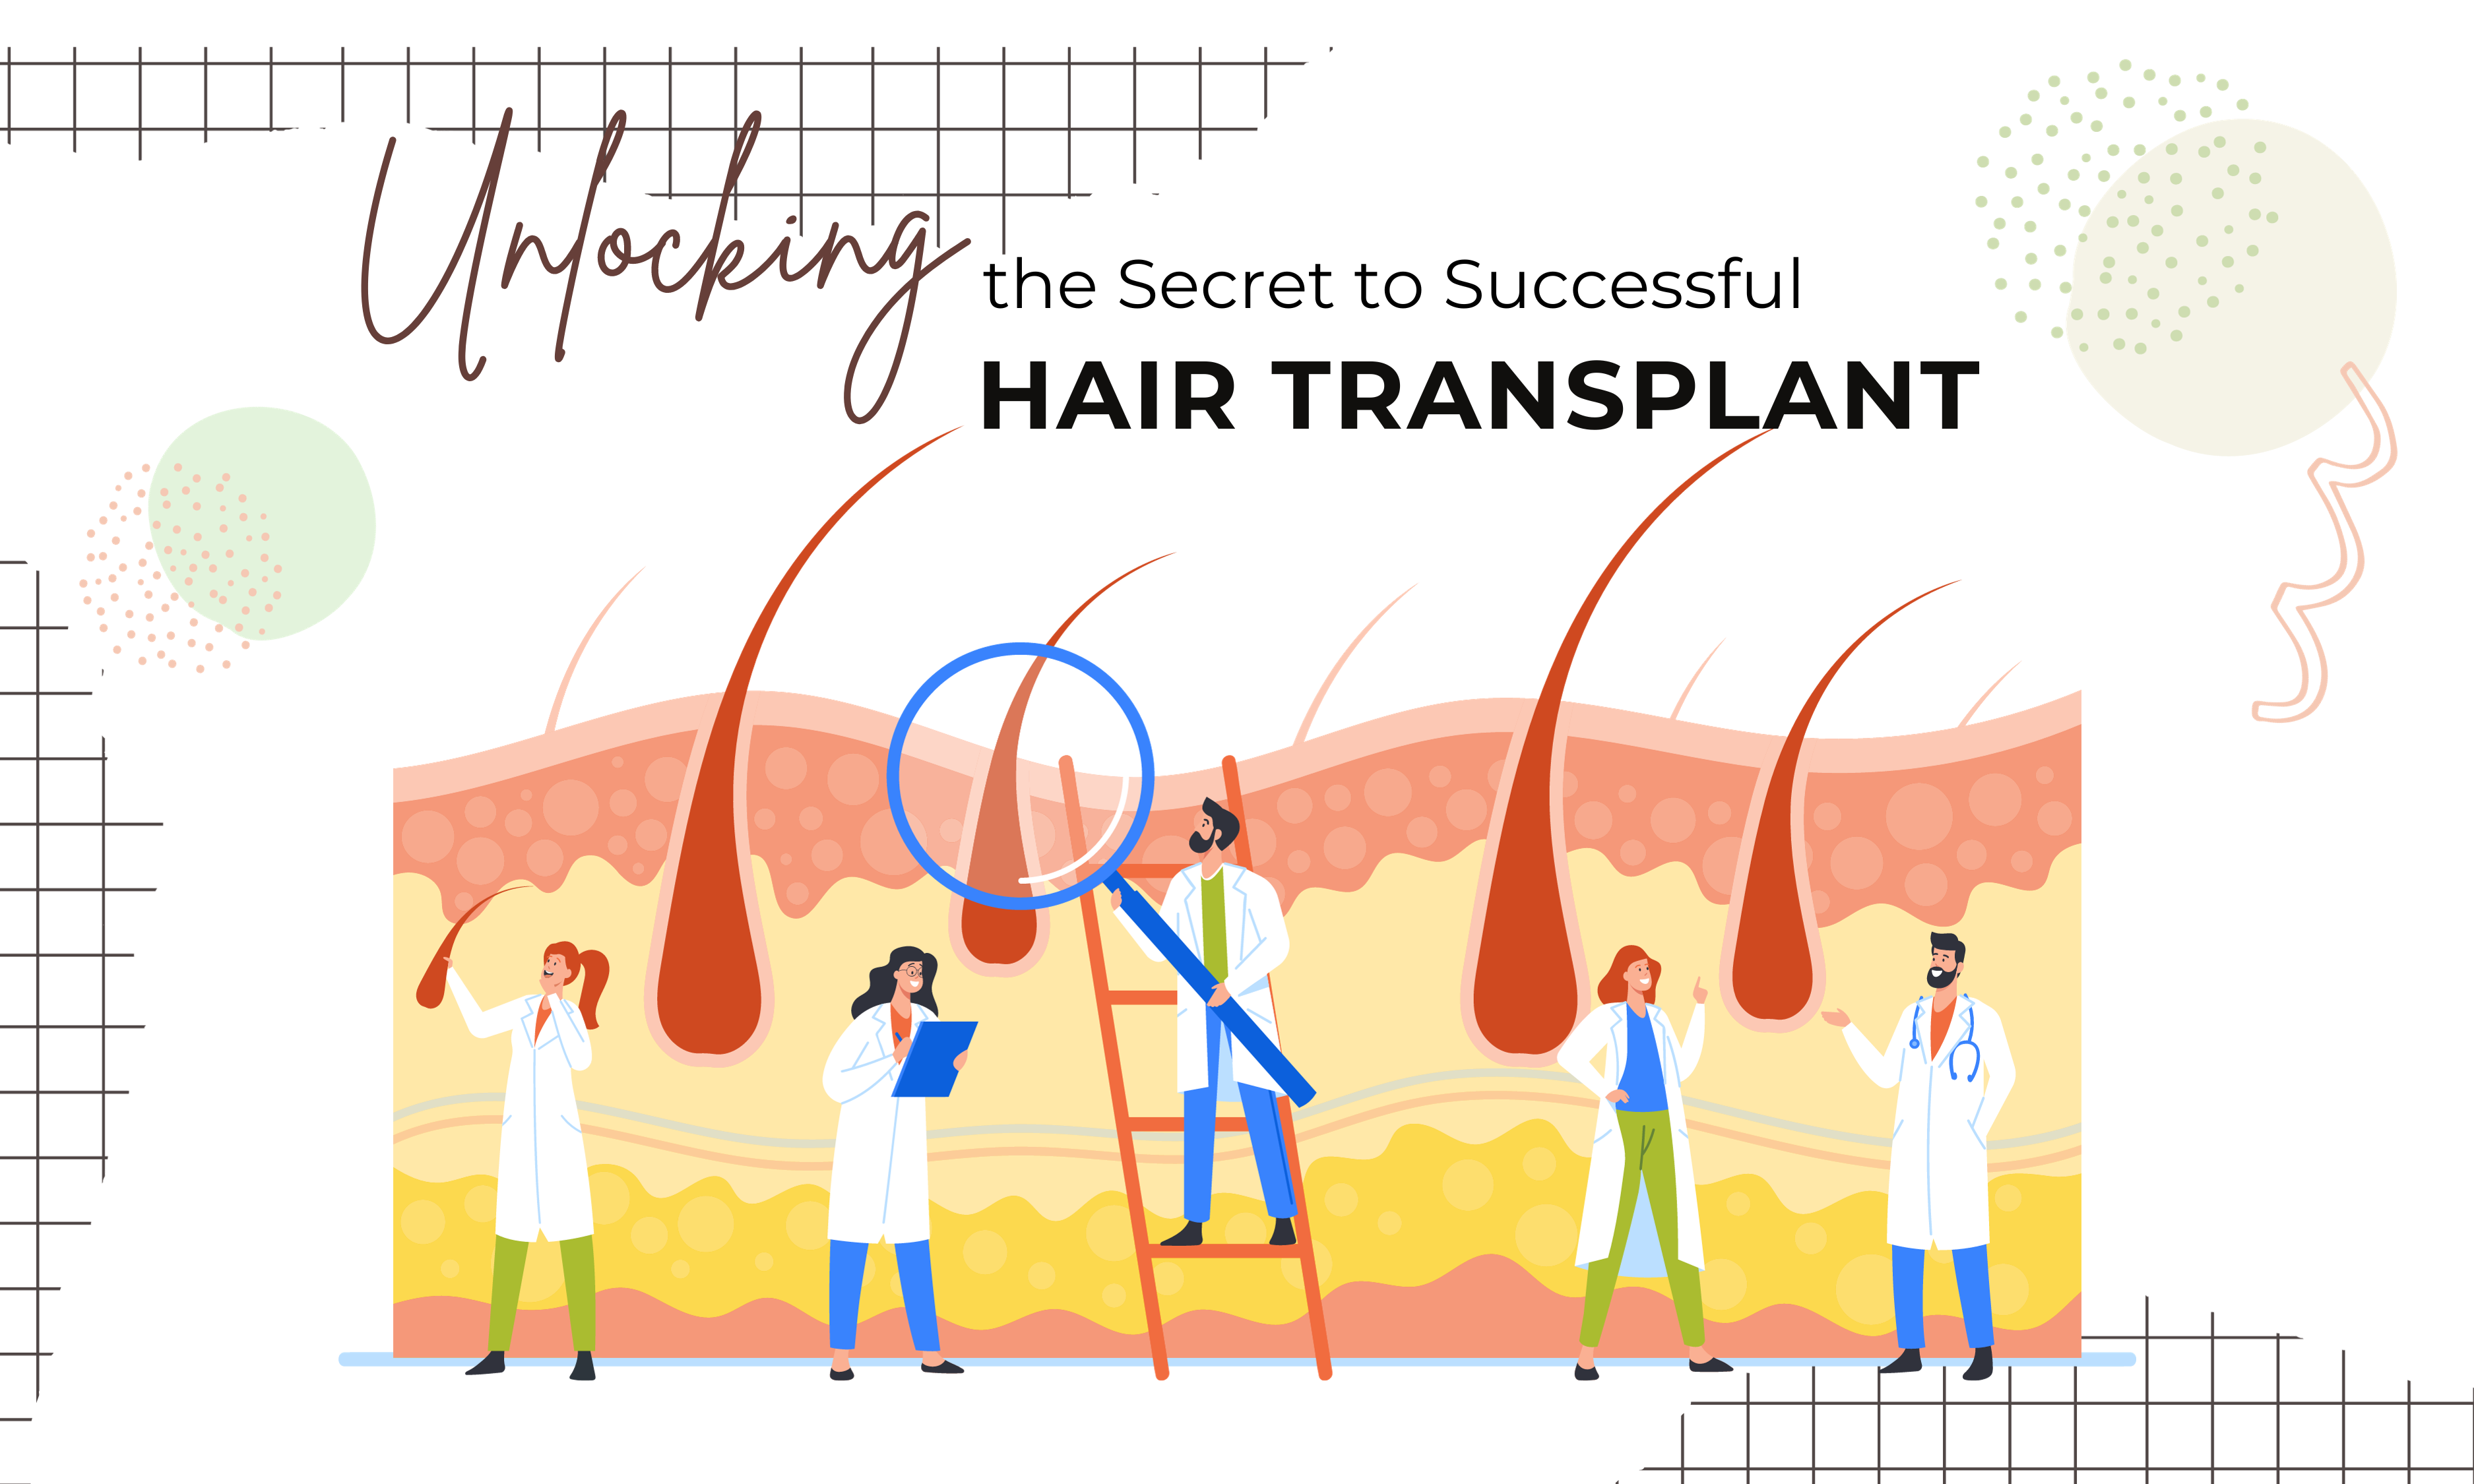 Unlocking the Secret to Successful Hair Transplantation